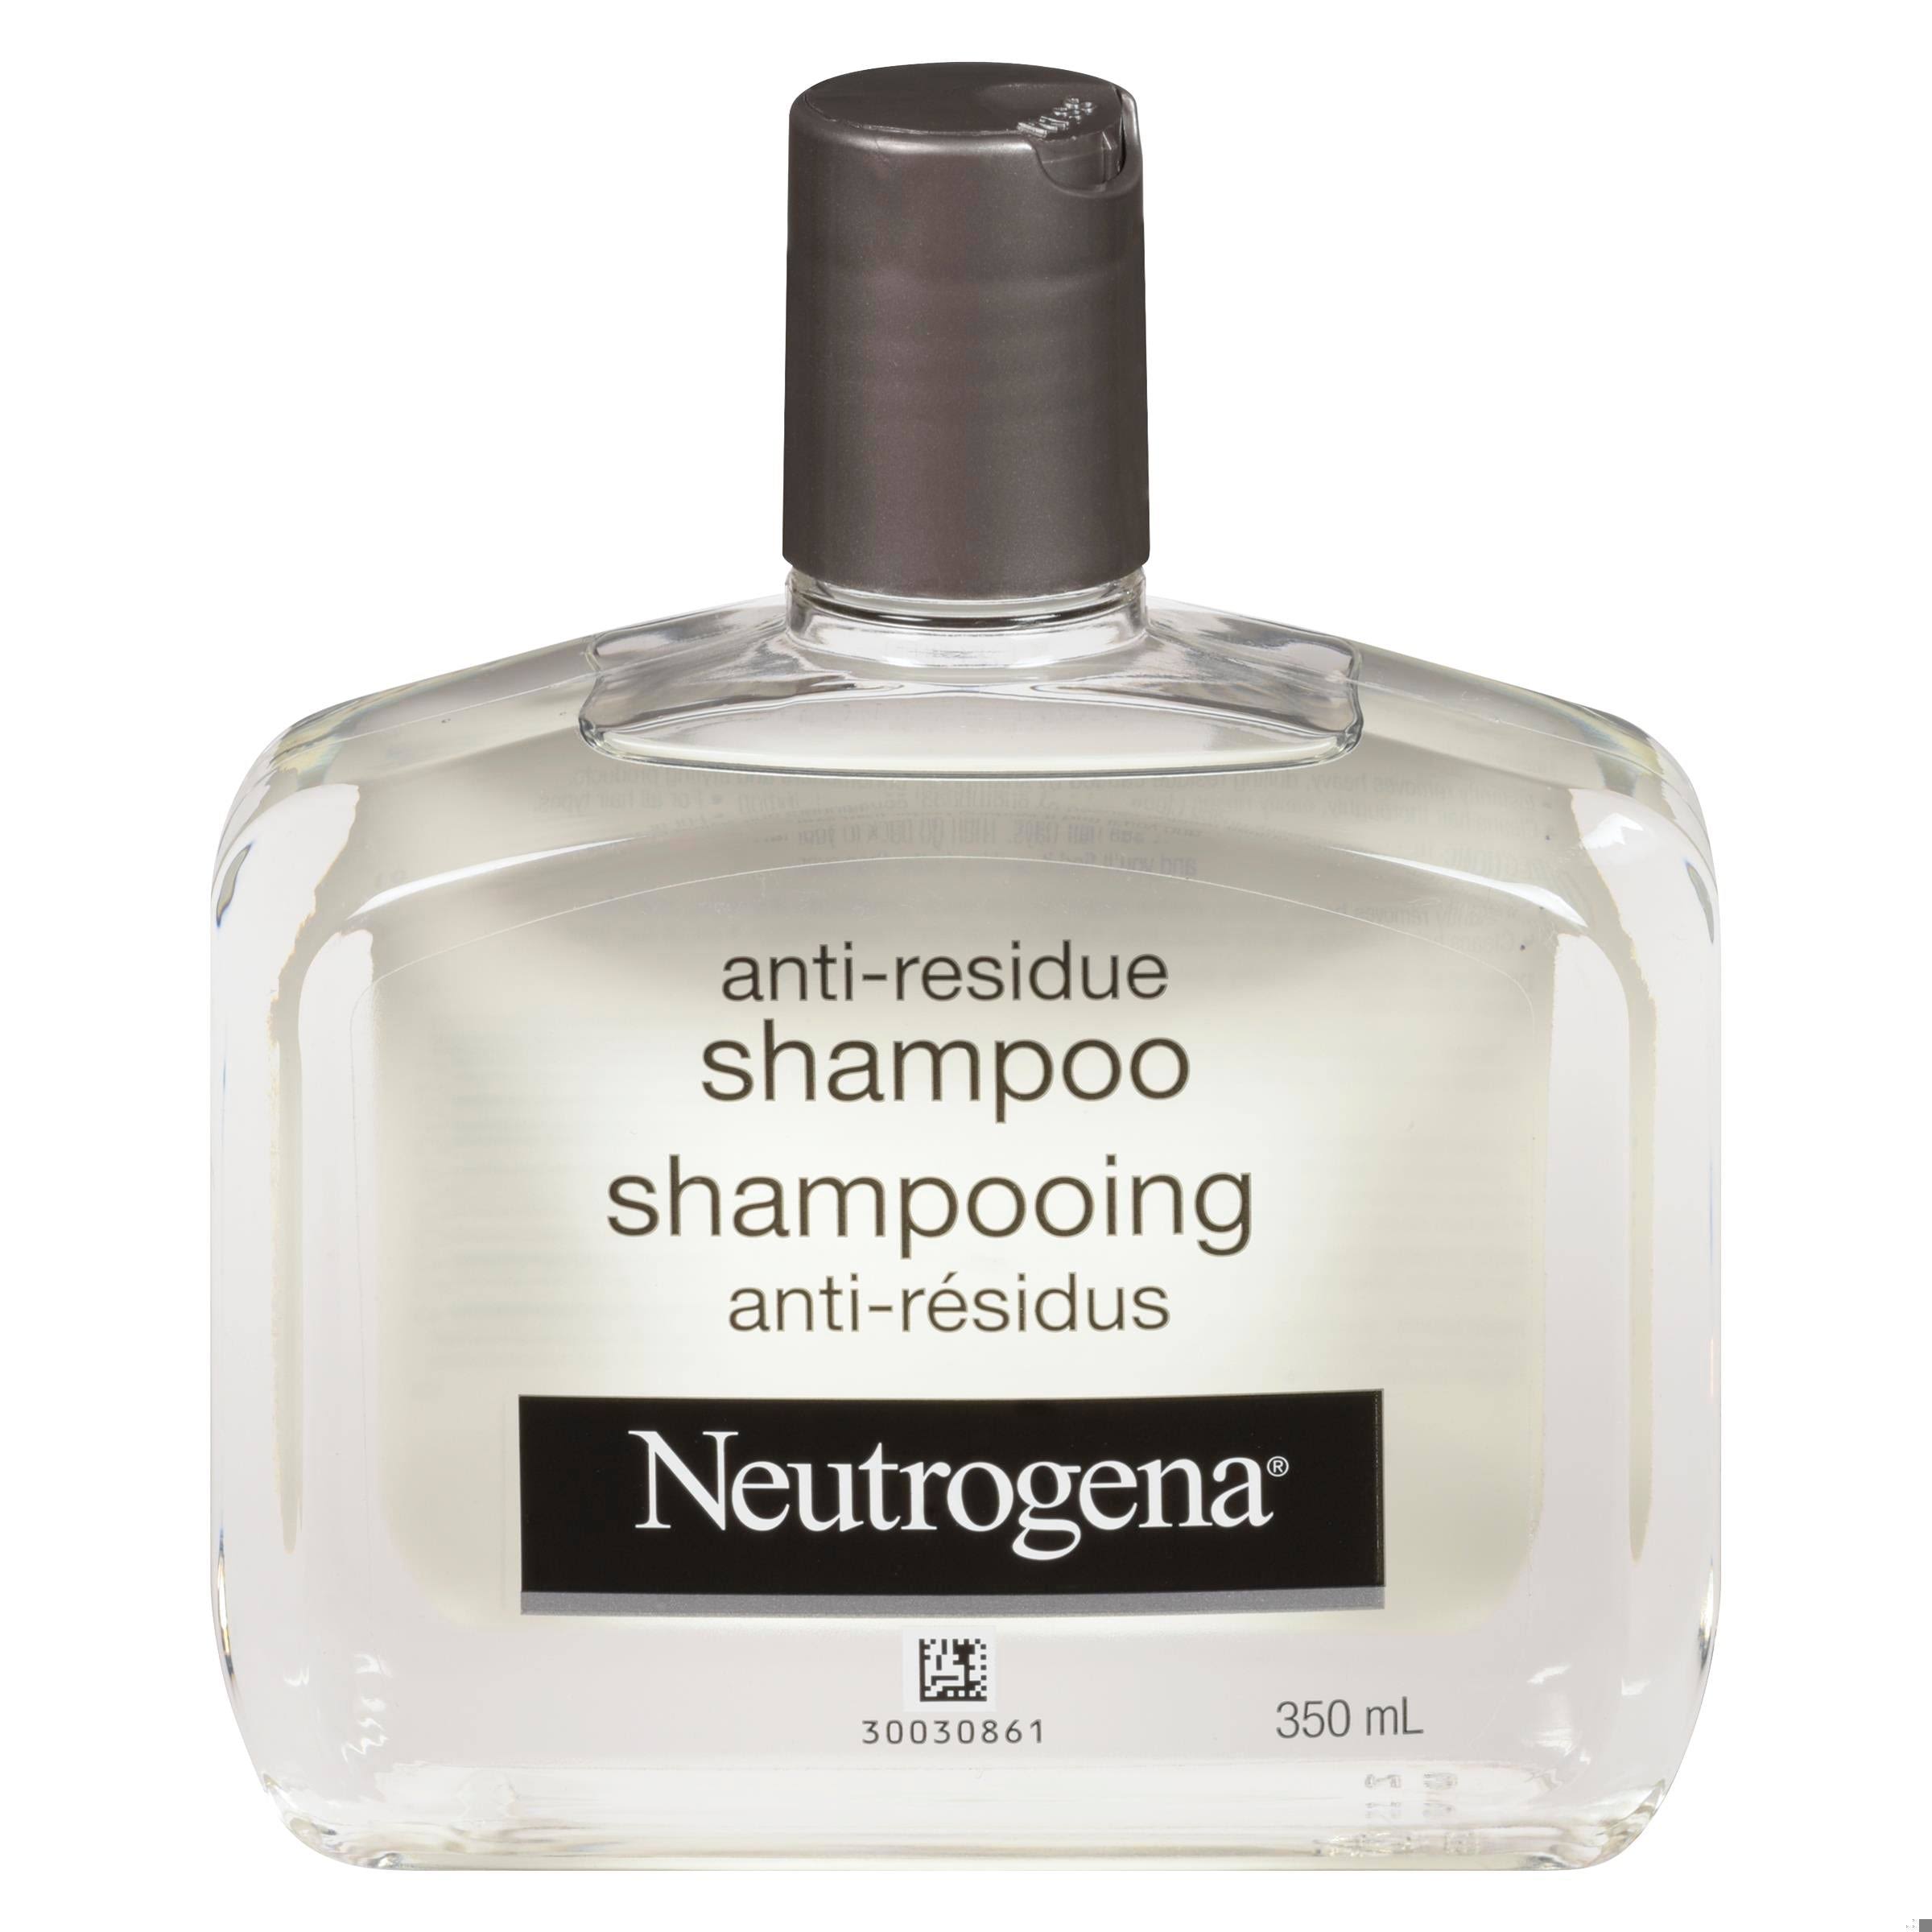 Neutrogena Anti-residue Shampoo - 350ml